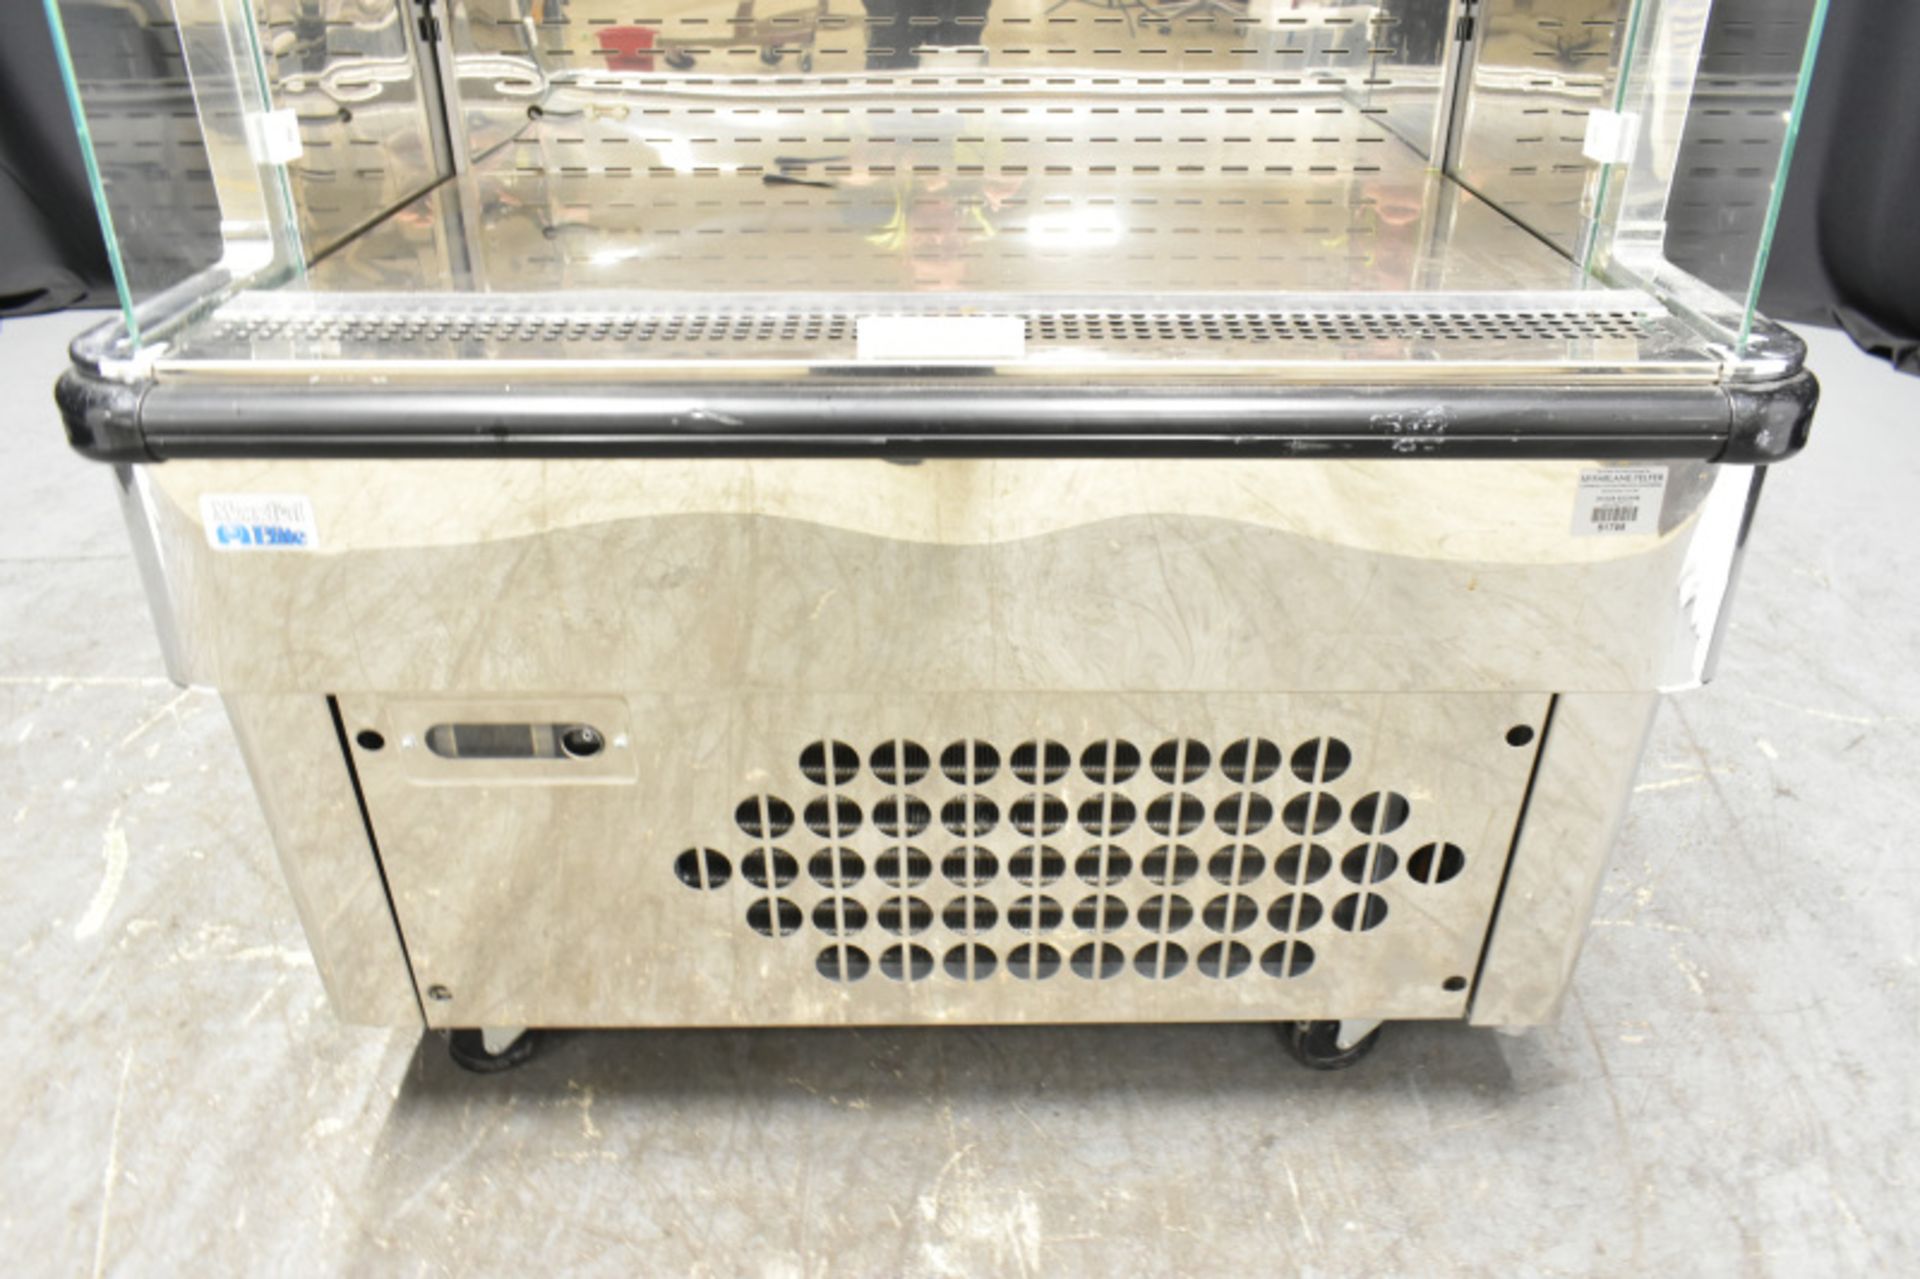 Mondial Elite Refrigeration Display Cabinet - Model E6142M0476 Serial No.228RA02228 - L10 - Image 3 of 9